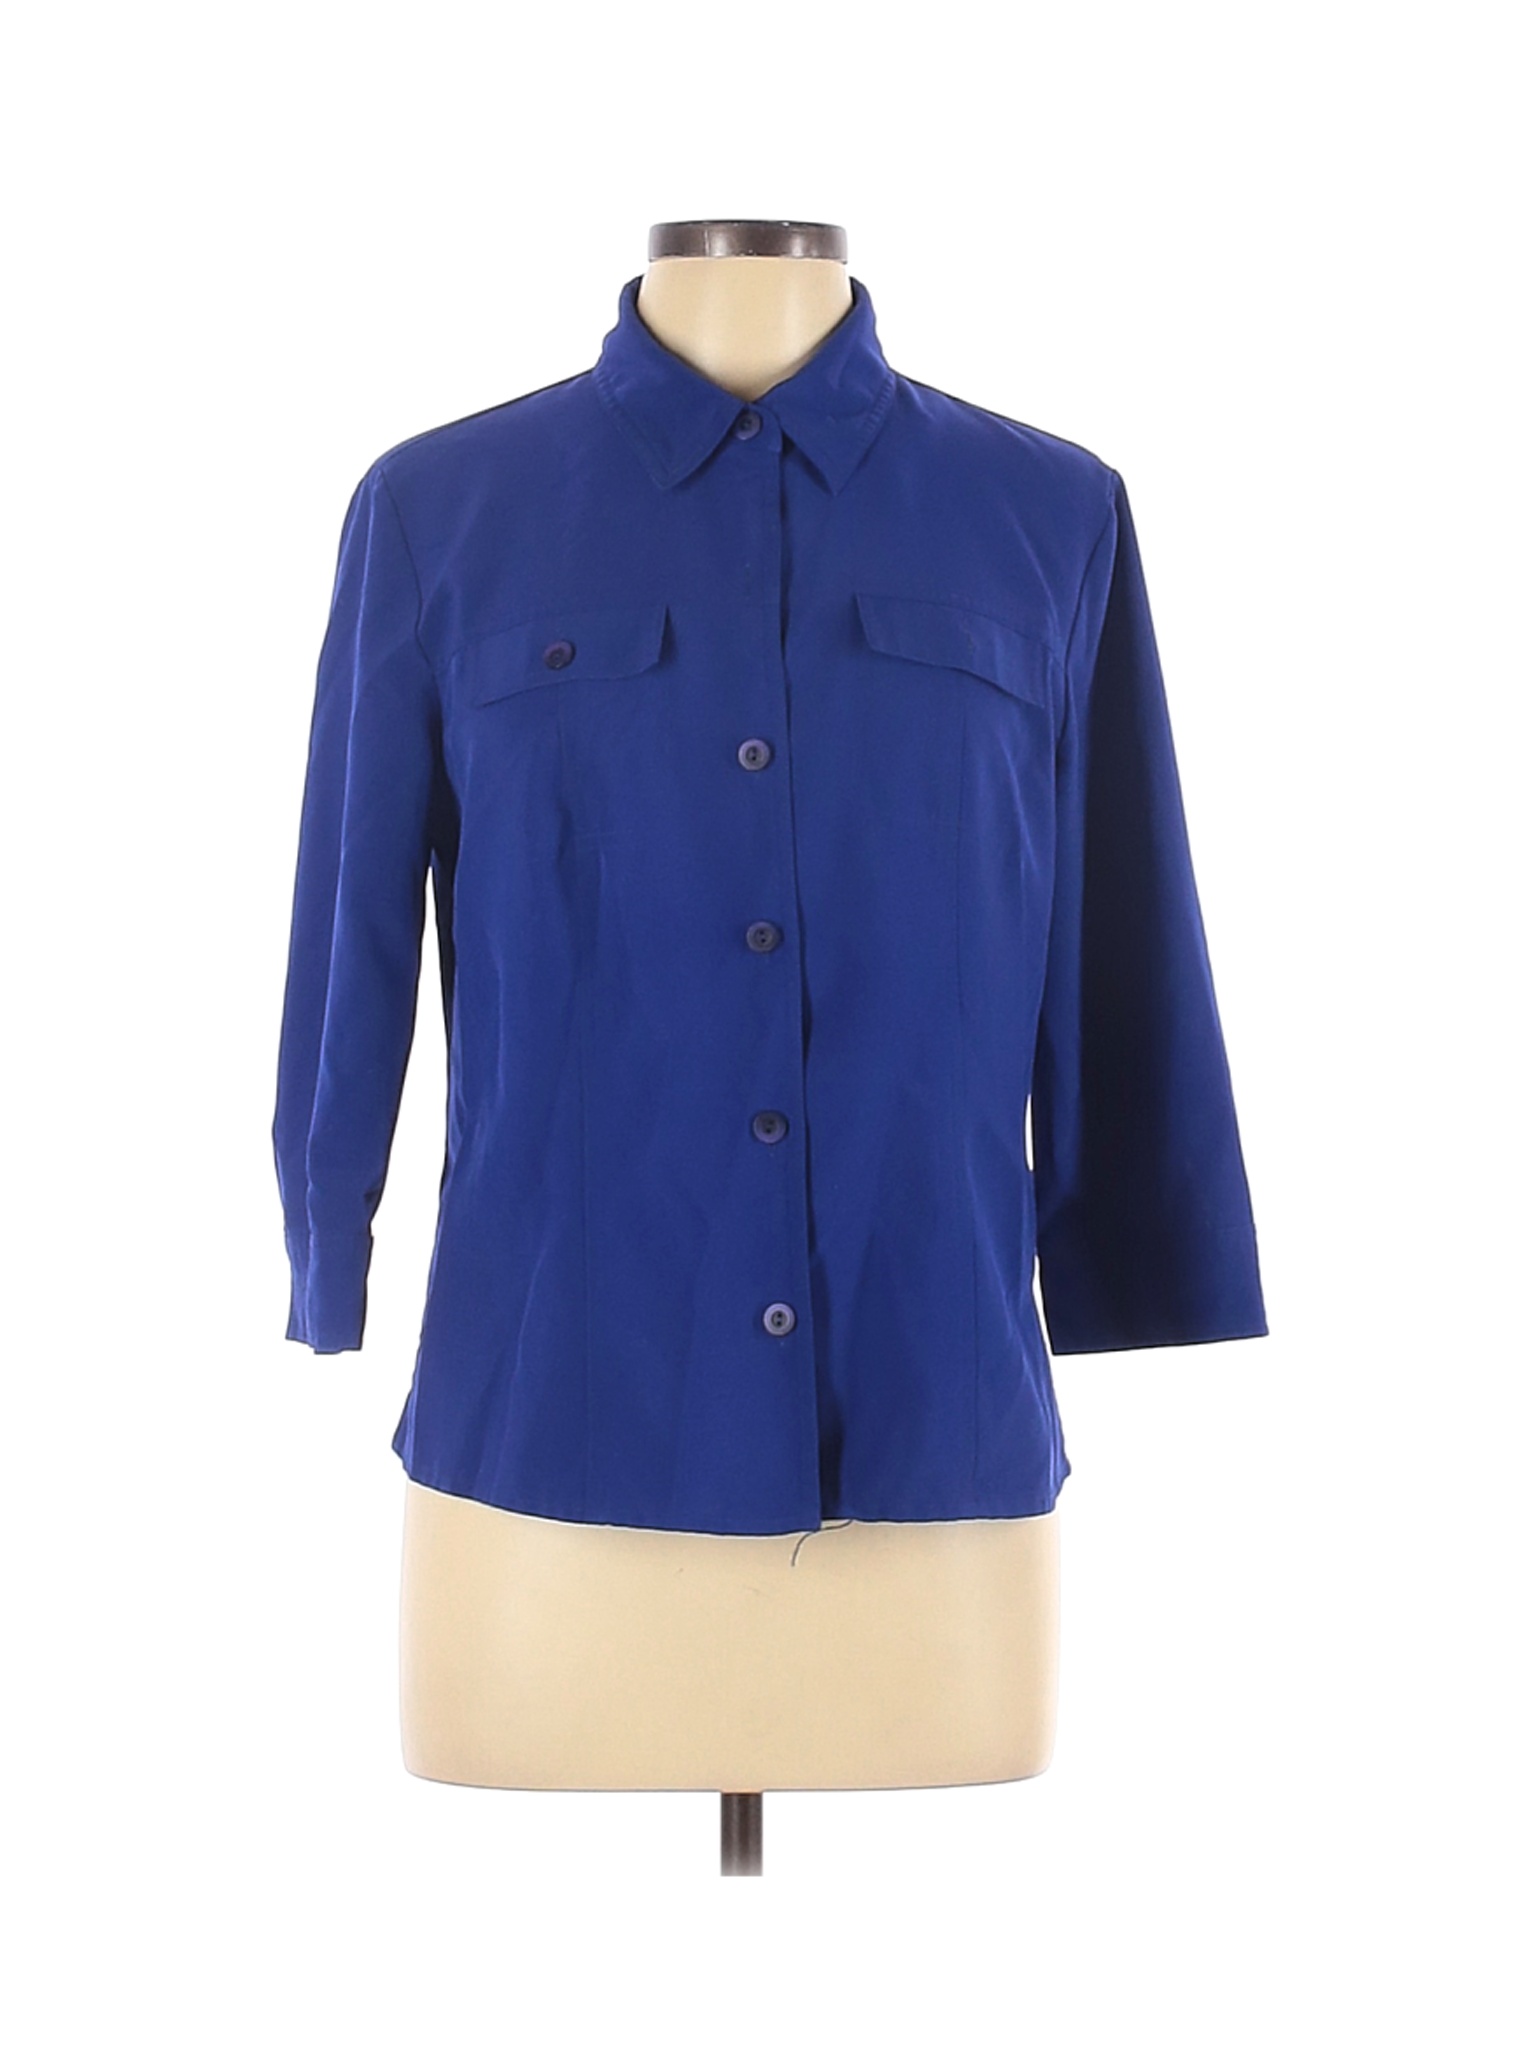 Kathy Che Women Blue 3/4 Sleeve Blouse 12 | eBay